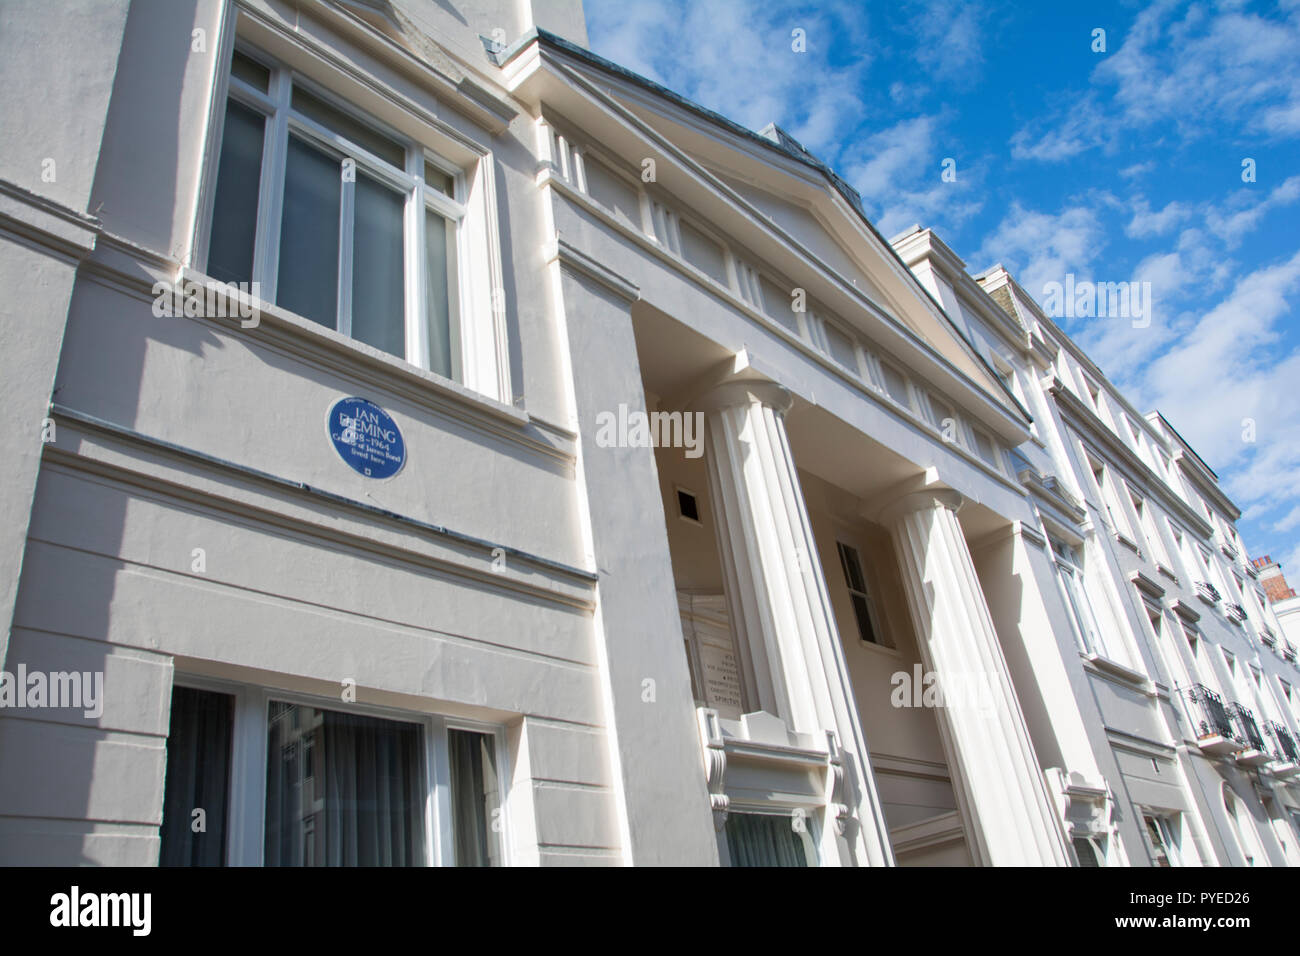 Ian Fleming's house, 22b Ebury Street, Knightsbridge, London, UK Banque D'Images